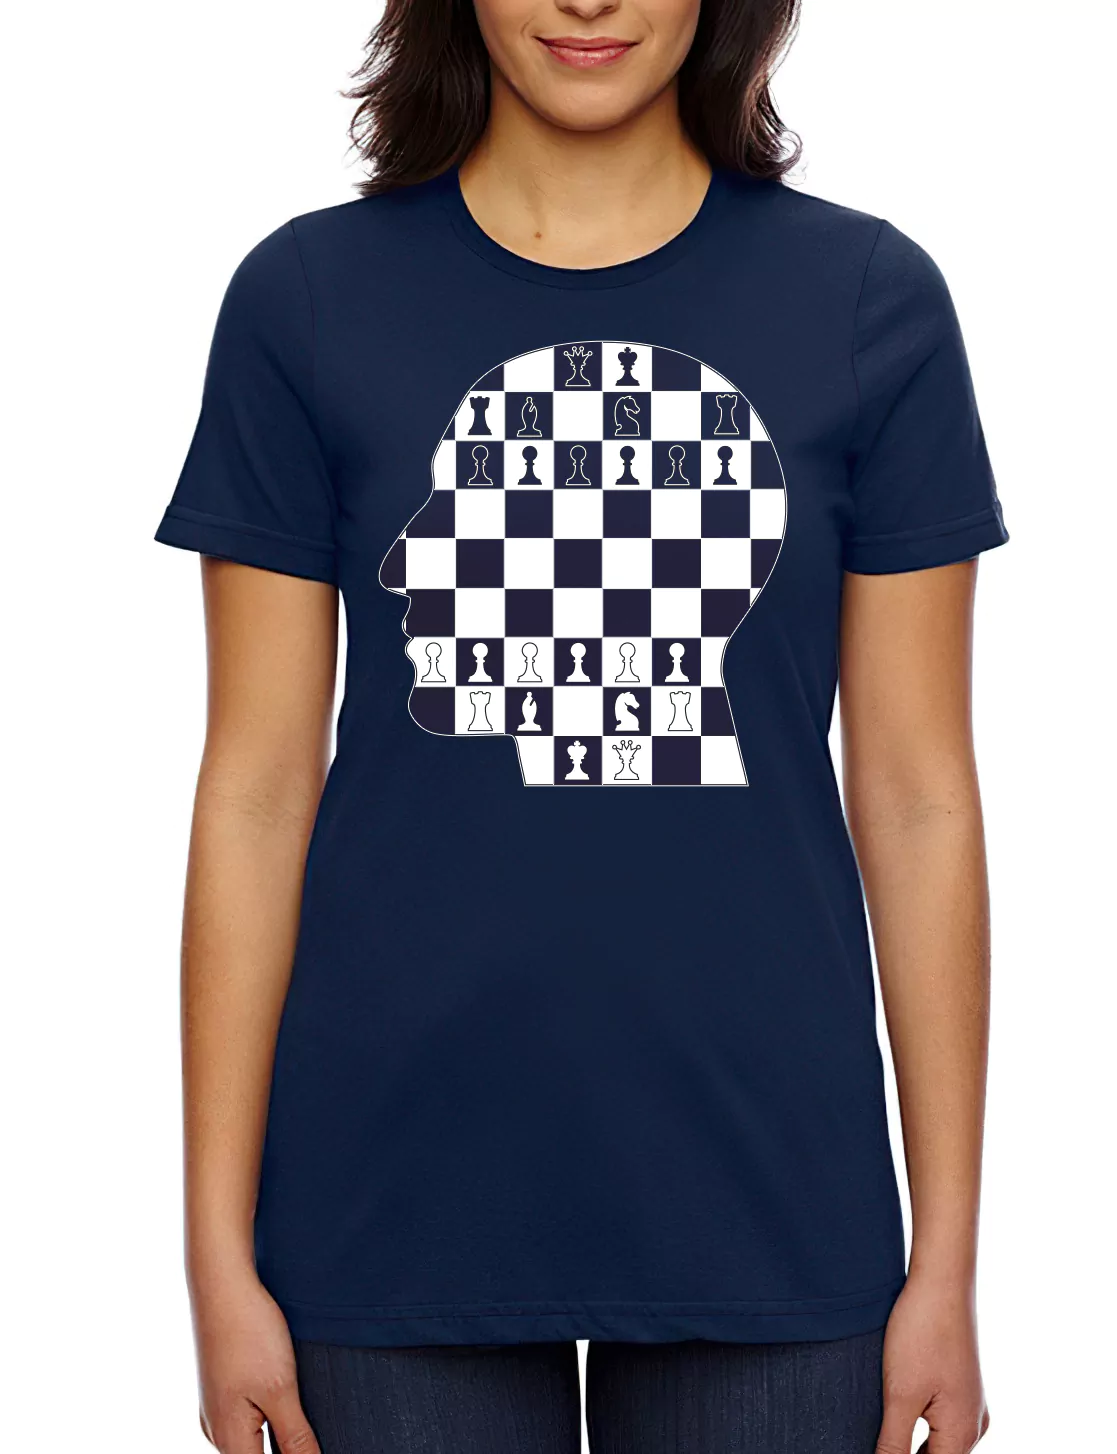 Chess Board Art navy blue tshirt for girls